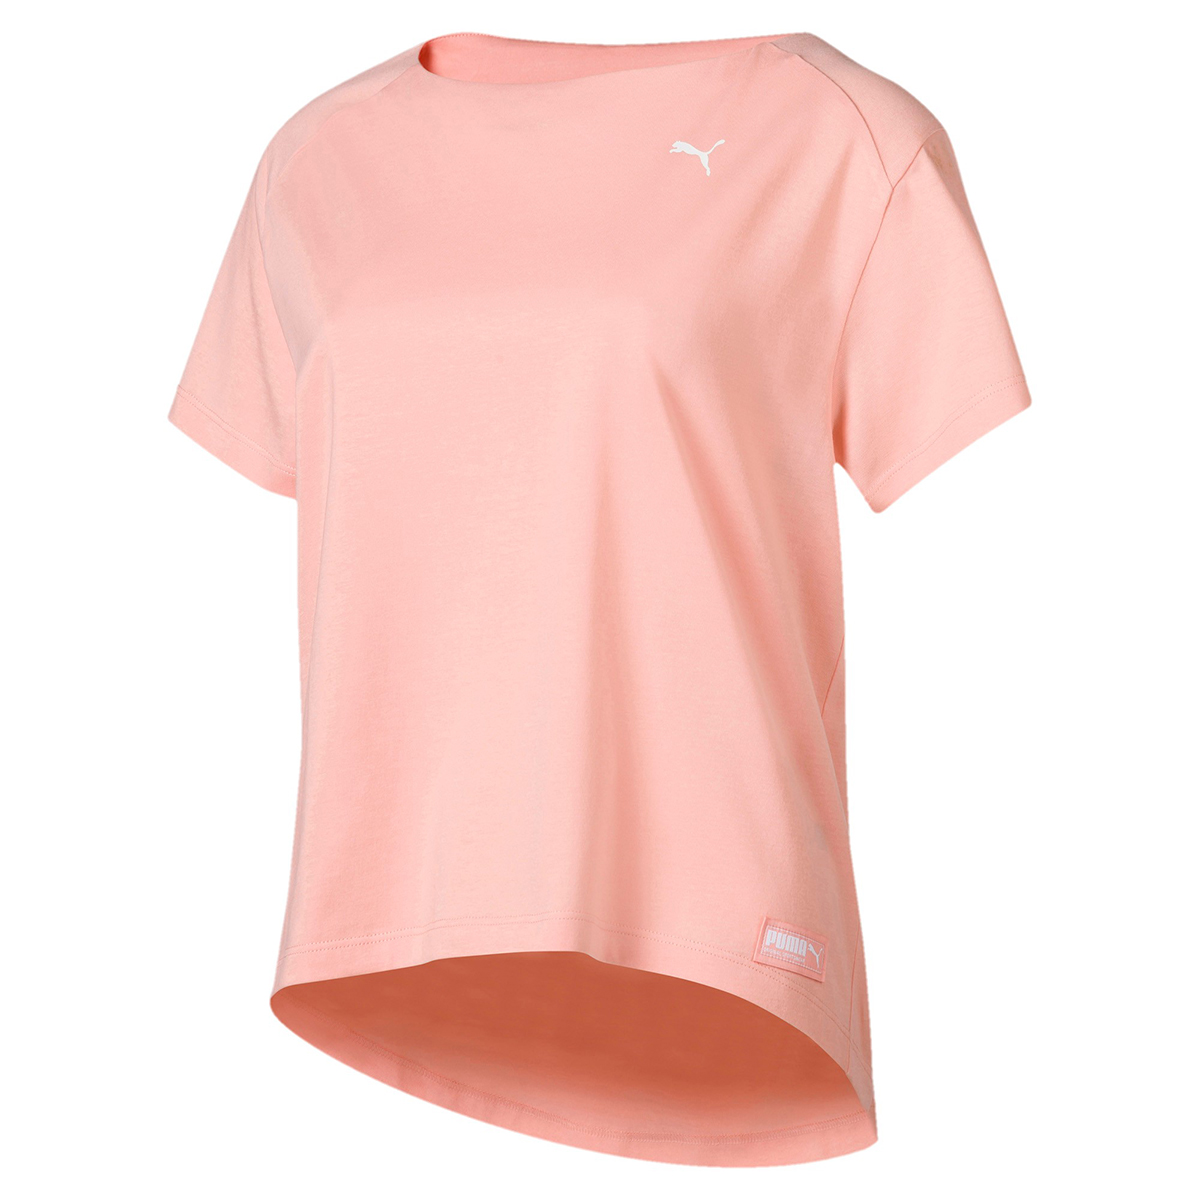 PUMA Damen Fusion Tee T-shirt pink 854338 19